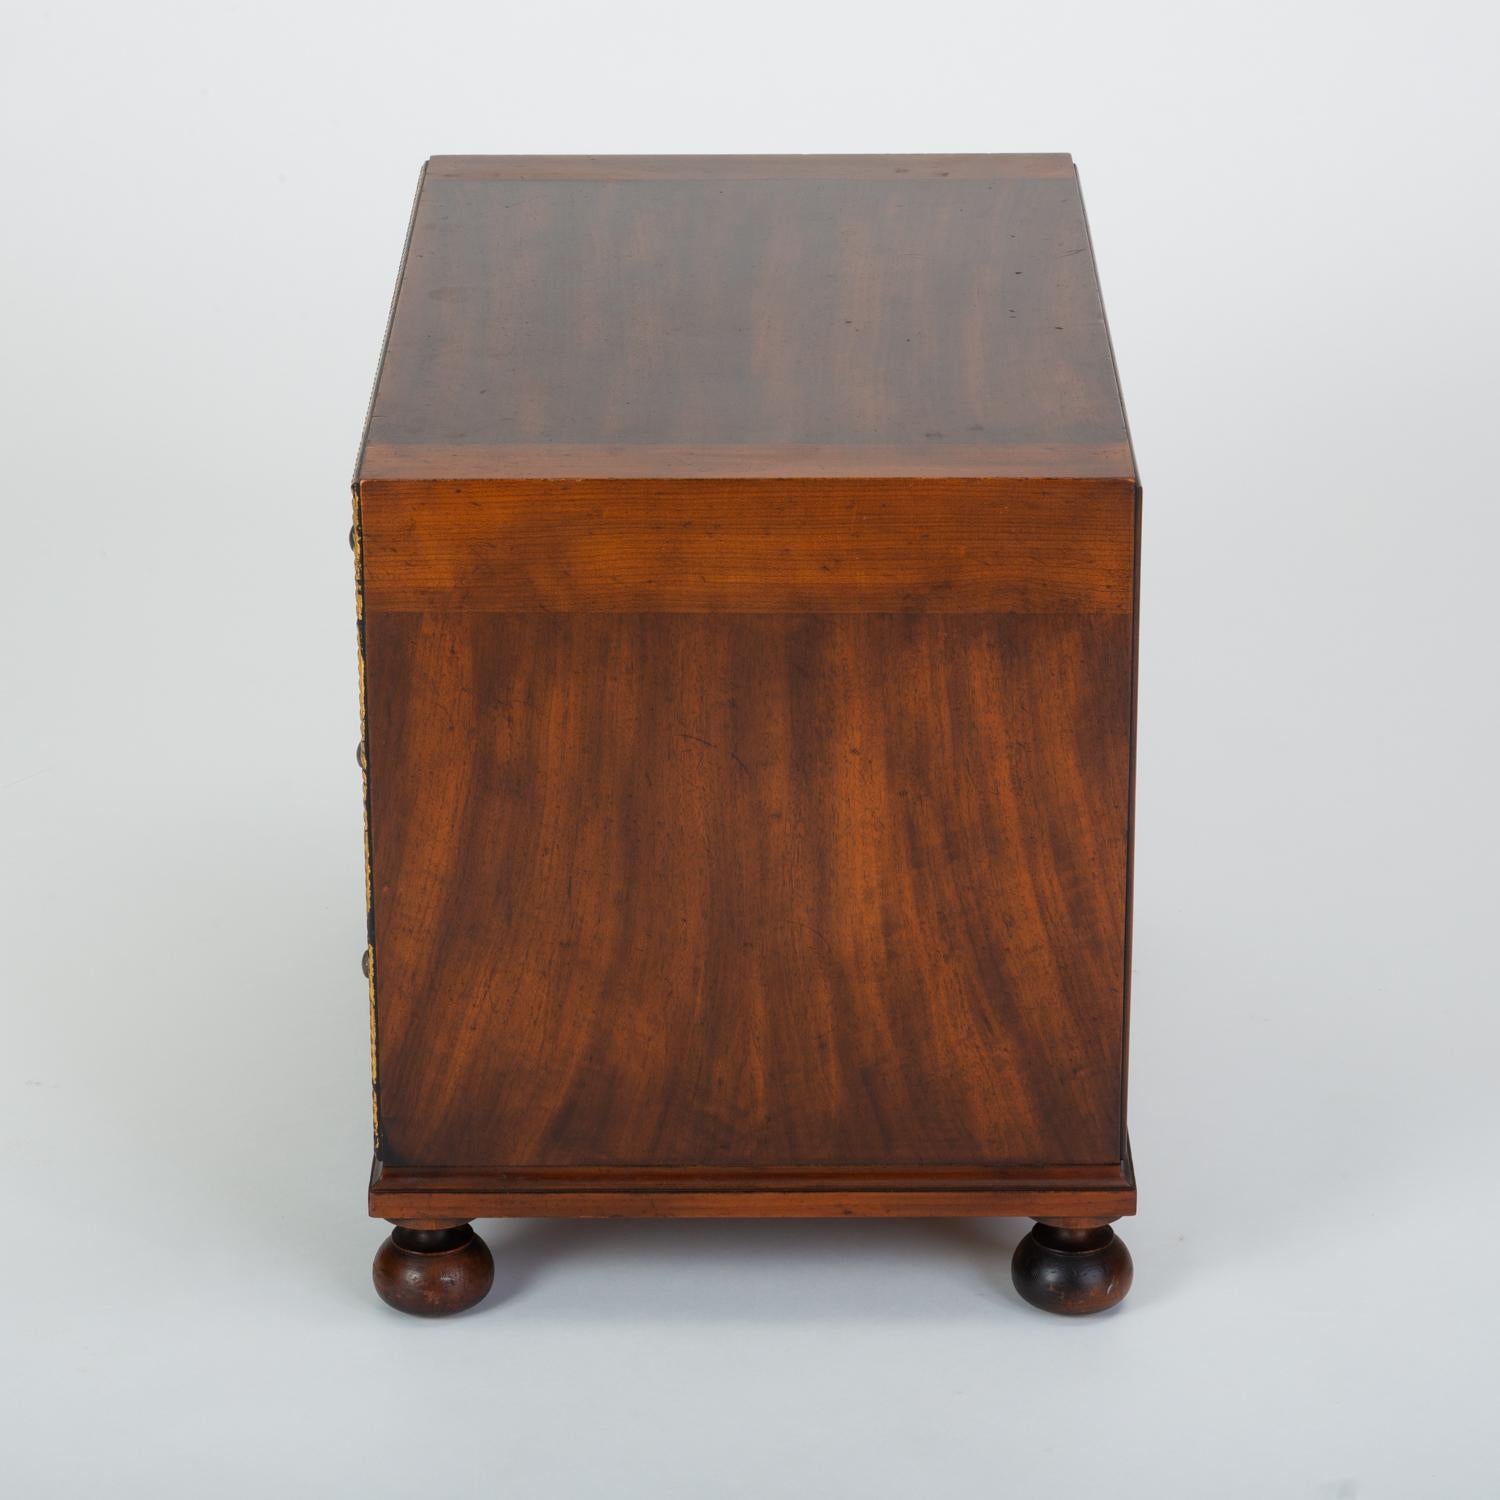 20th Century Small Walnut Dresser in Spanish Revival Style by John Widdicomb